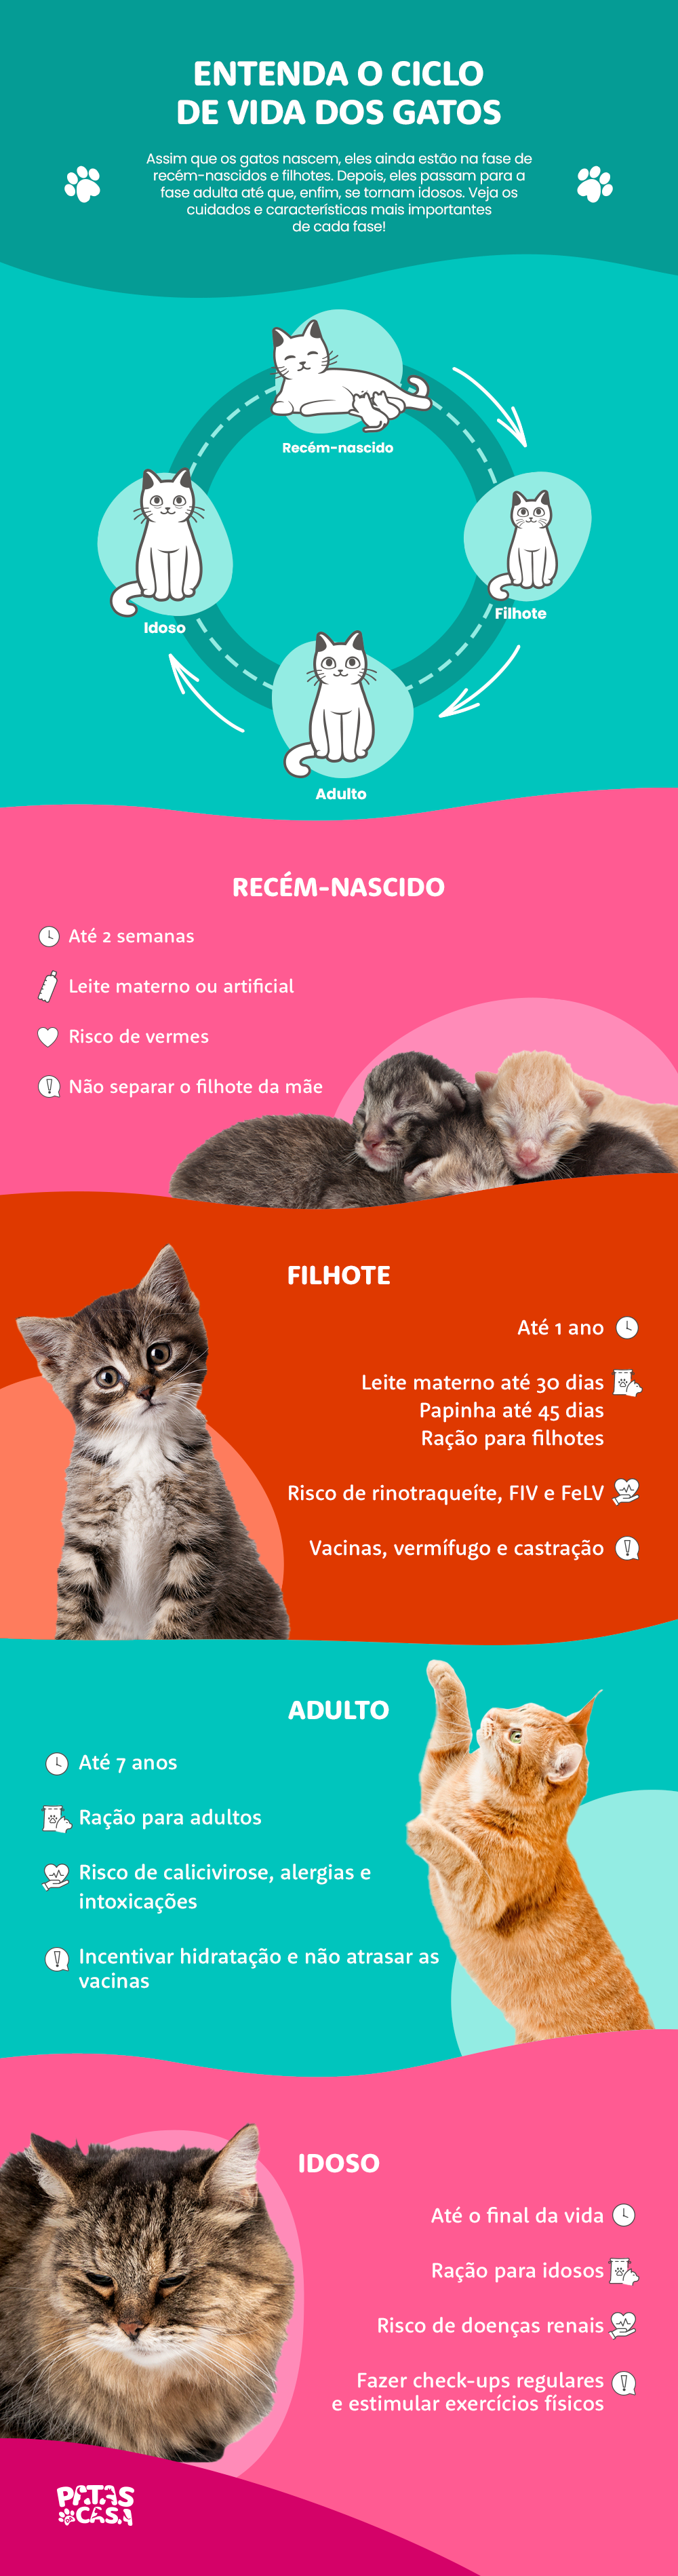 Bloco informativo mostrando o ciclo de vida dos gatos